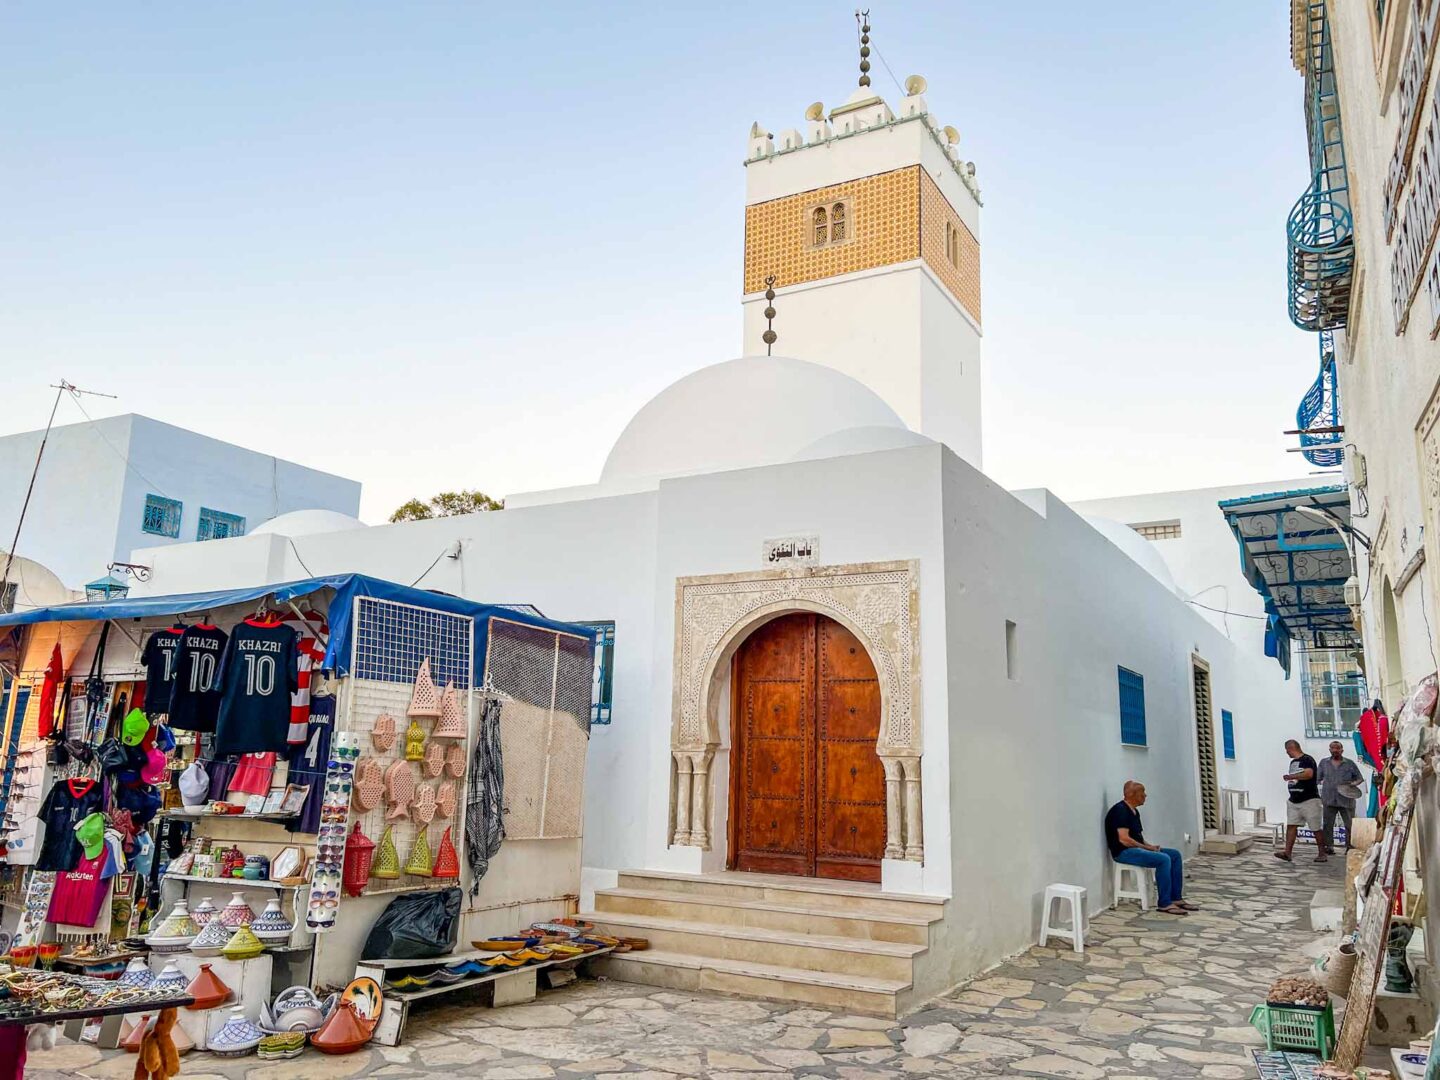 Tunisia itinerary, 3 days in Tunisia, Great Mosque of Hammamet